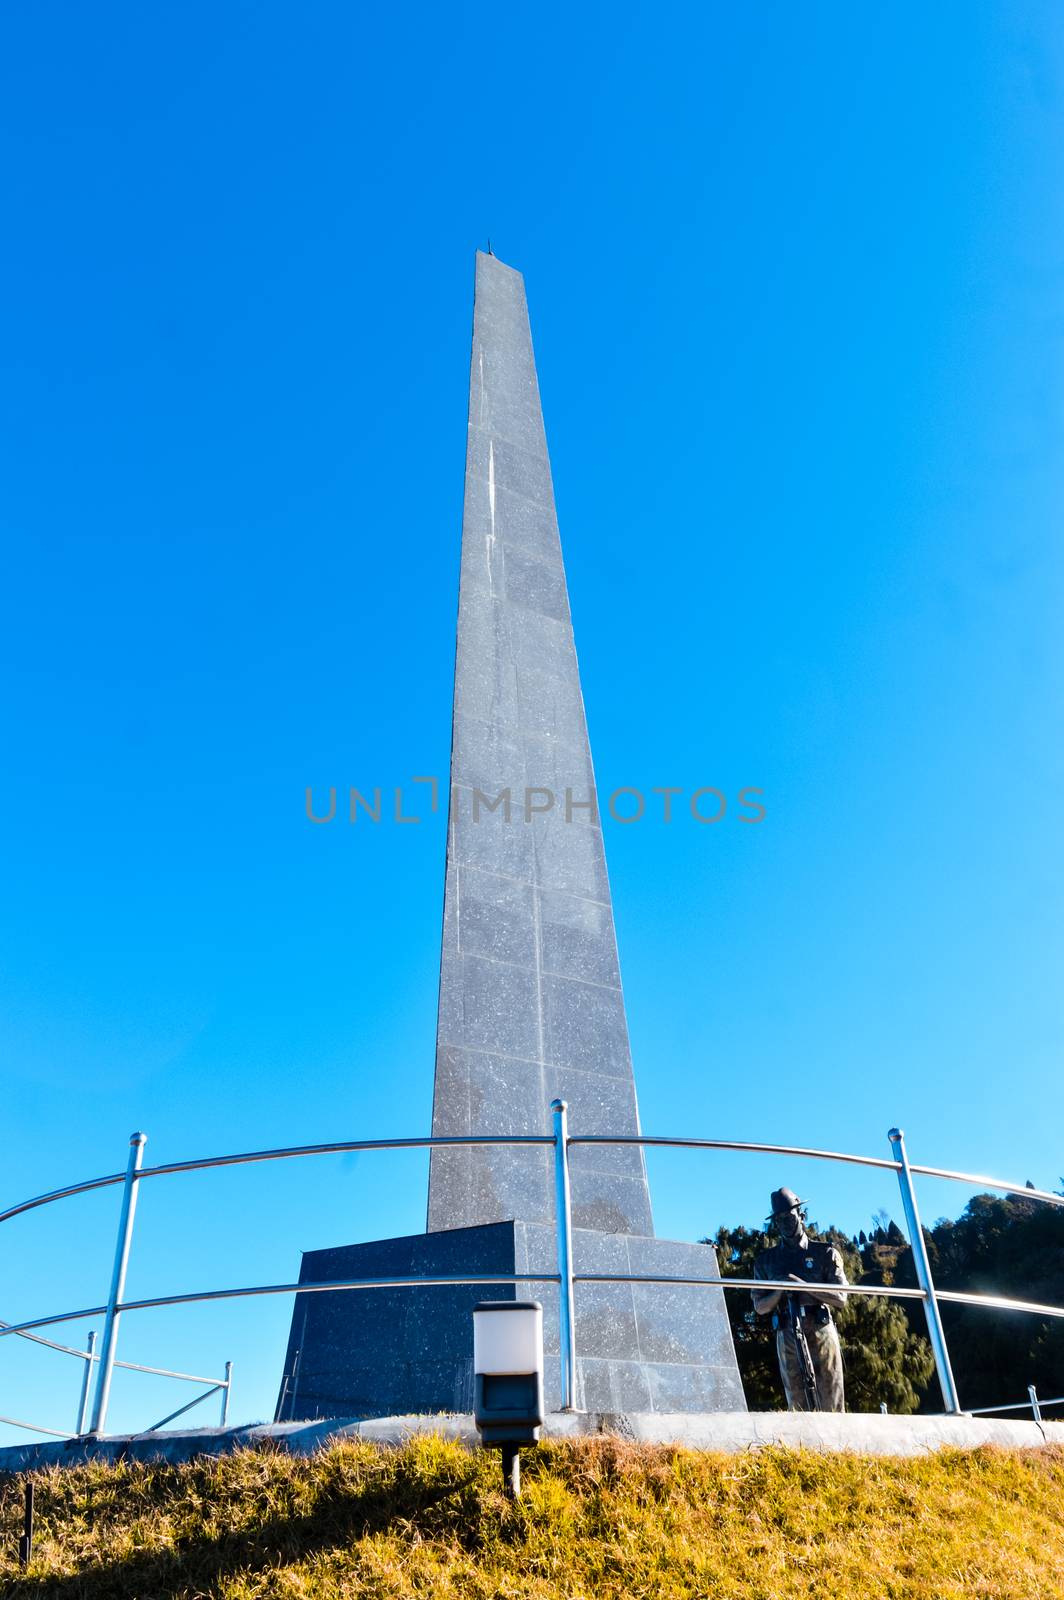 Batasia Loop, Darjeeling, 2 Jan 2019: View of Batasia loop war memorial, The famous Gorkha war memorial in Ghum, Darjeeling India. Place opened in1995 to commemorate soldiers of Indian independence